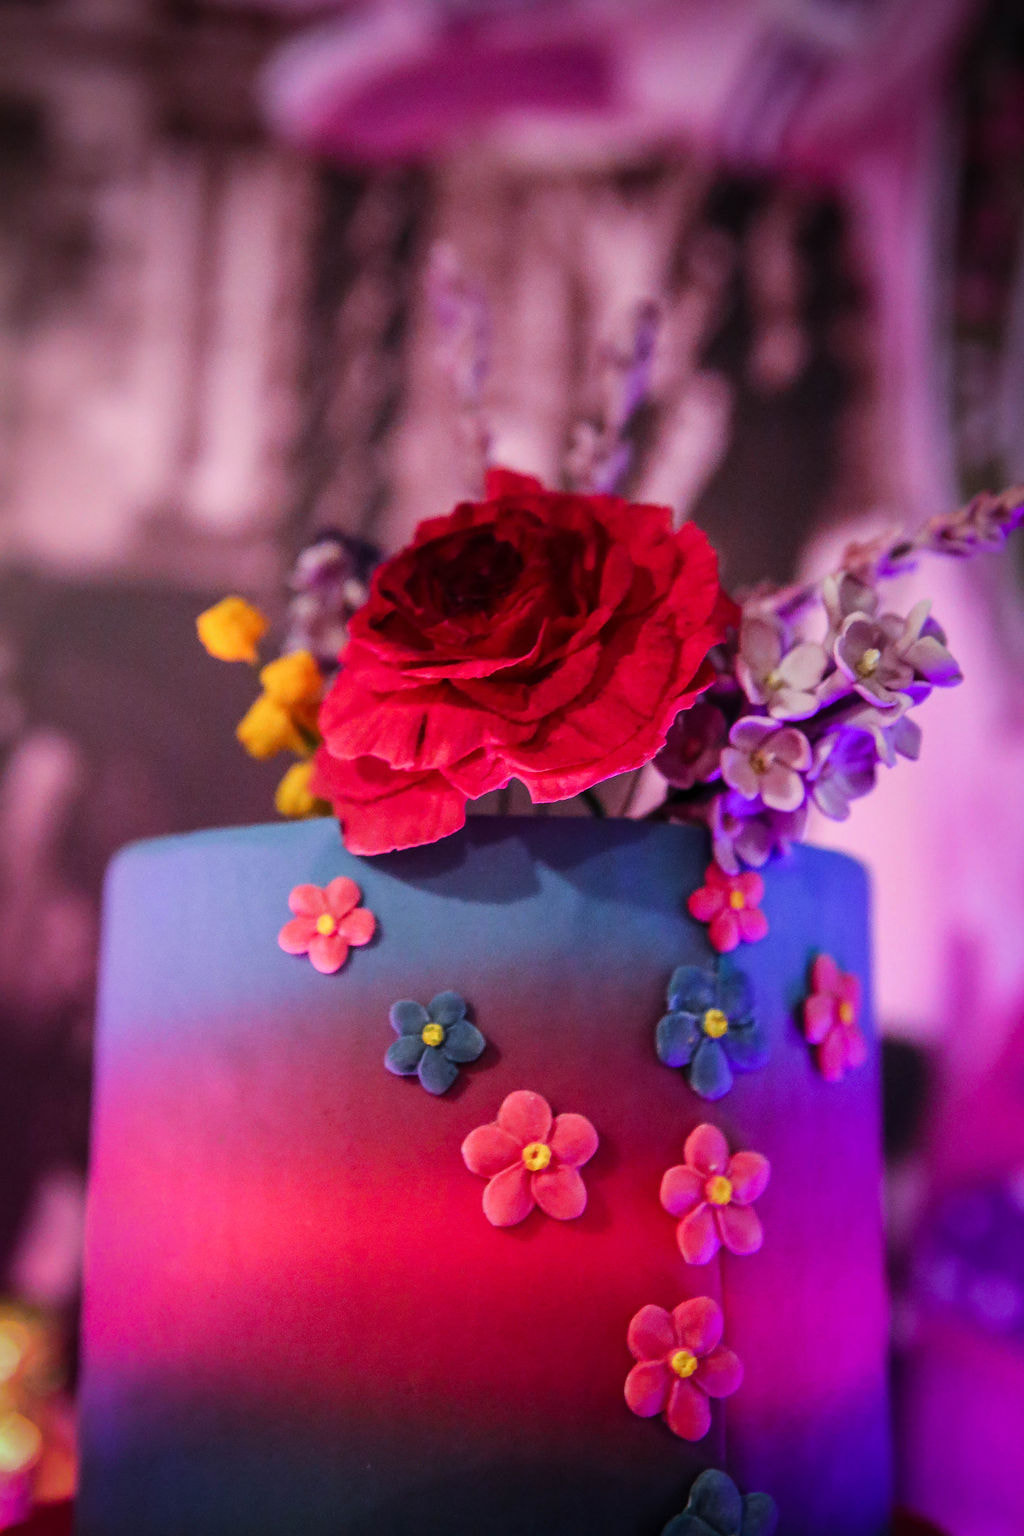 Bright, neon inspired wedding cake with handmade sugar flowers